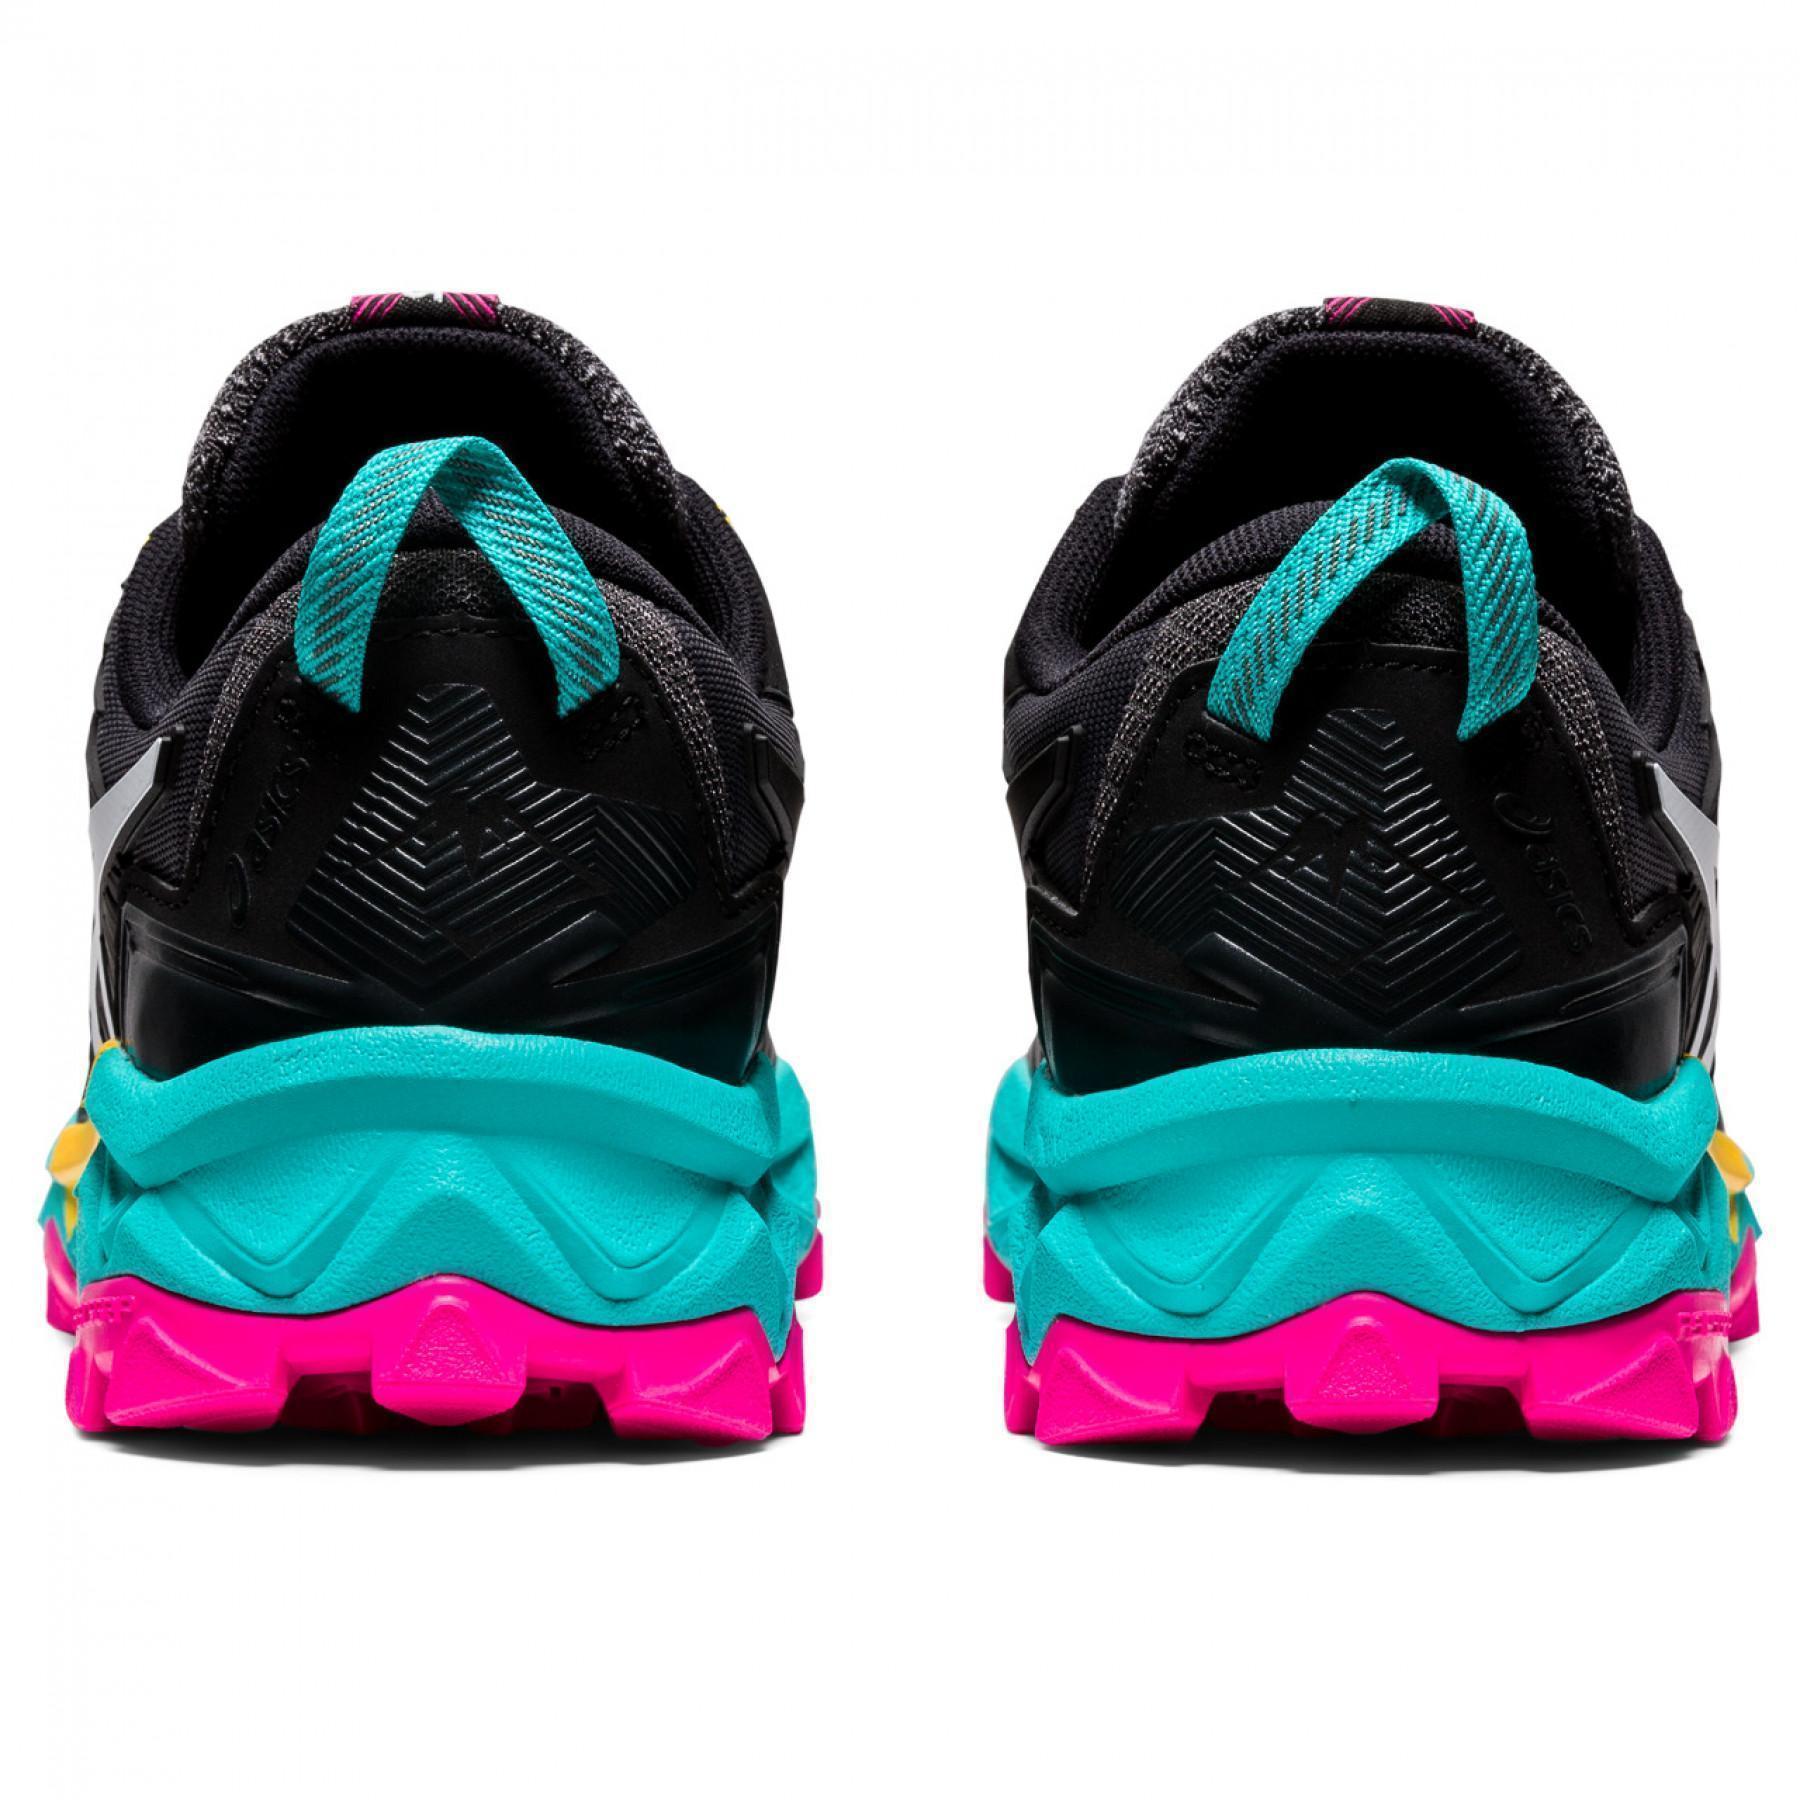 Sapatos de trilha para mulheres Asics Gel-Fujitrabuco 8